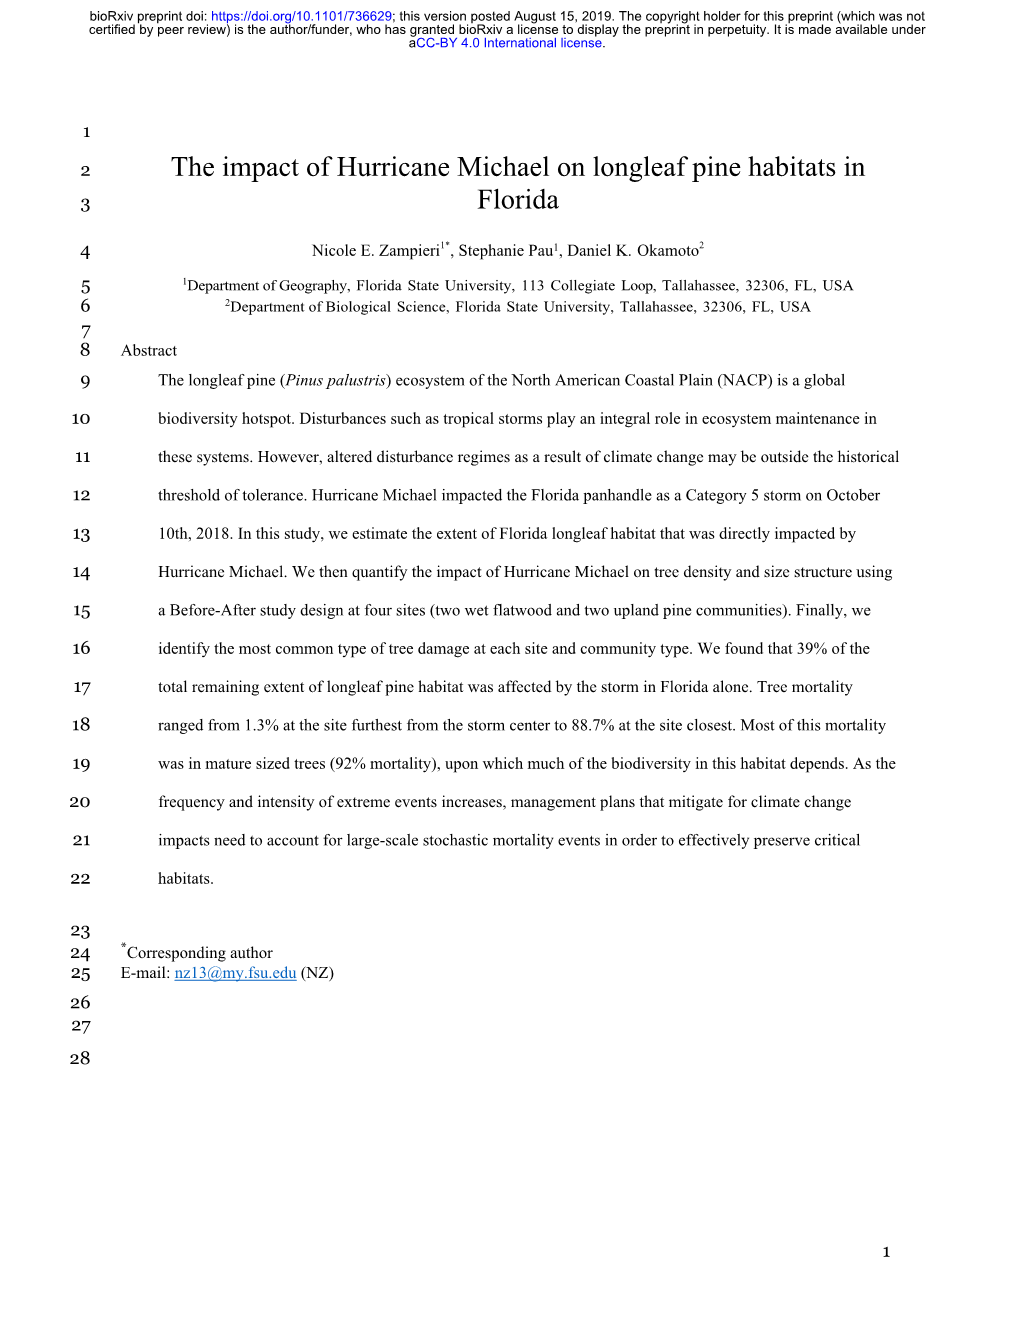 The Impact of Hurricane Michael on Longleaf Pine Habitats in 3 Florida